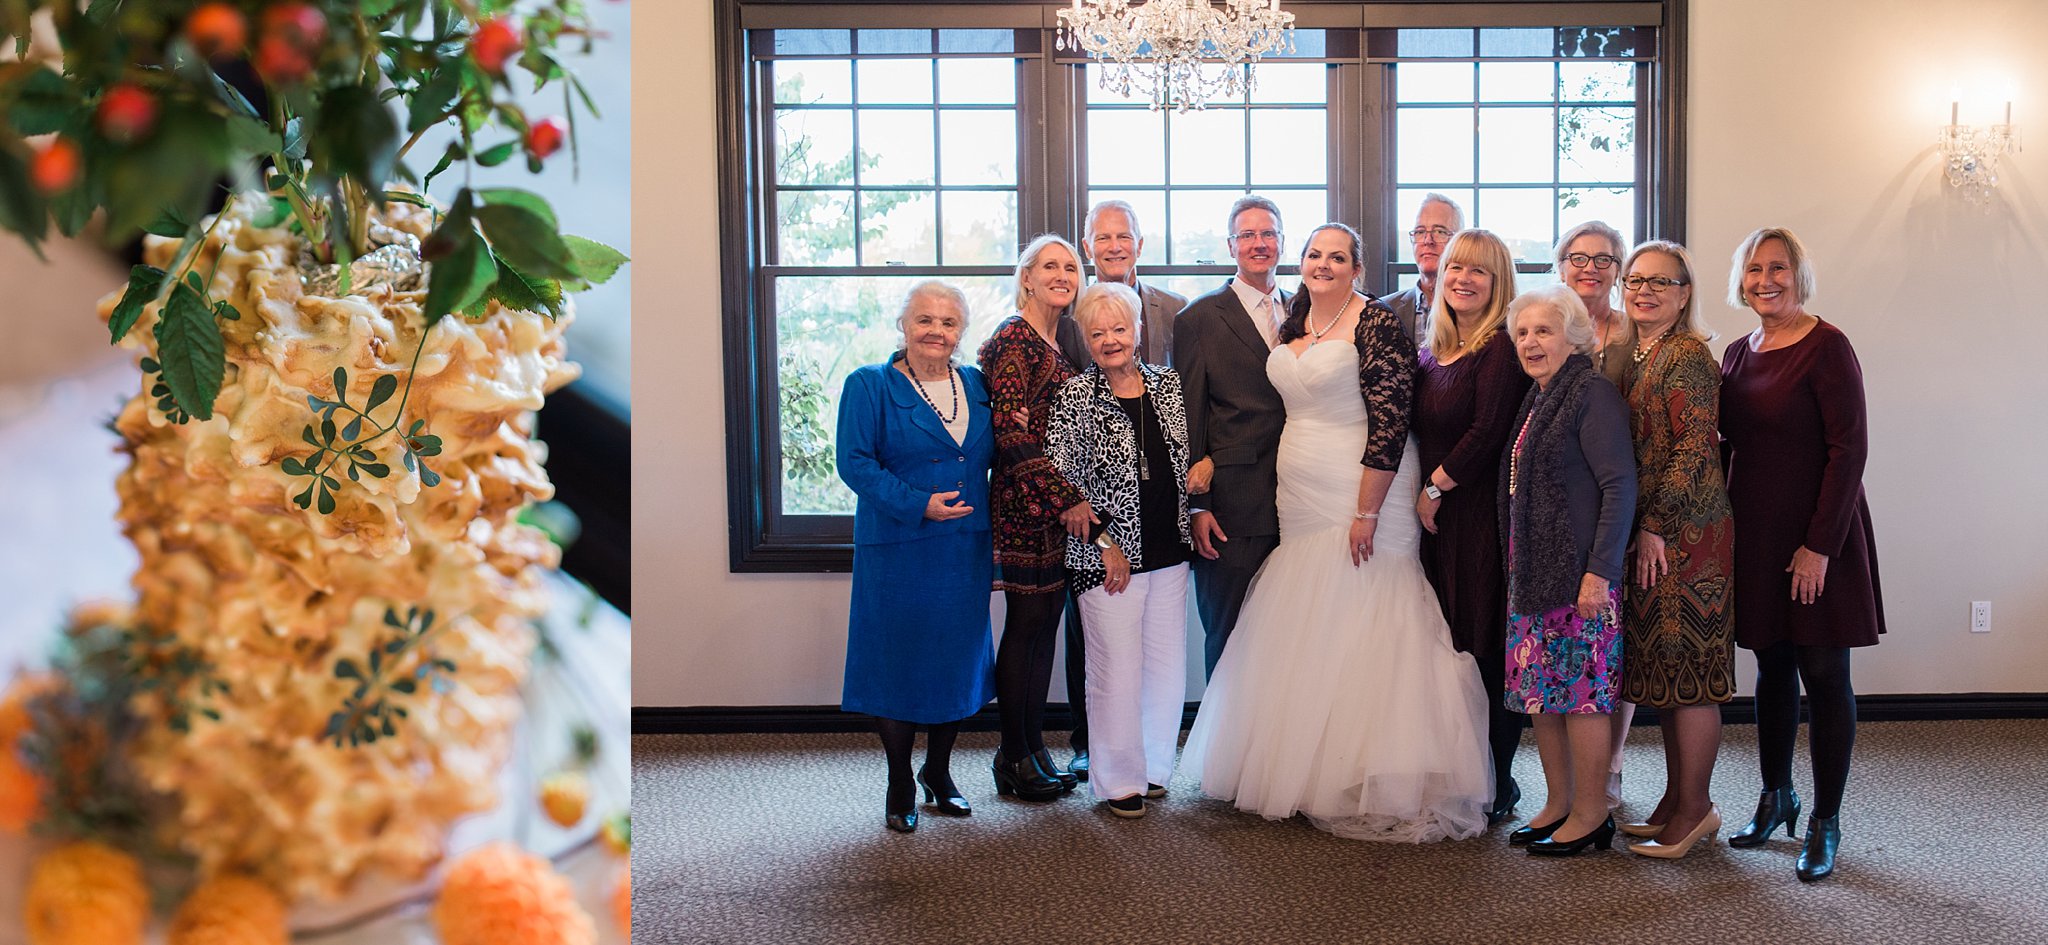 Jennifer Blaak Photography, Toronto Wedding Photographer, Pipers Heath Golf Club in Milton, Wedding Cake, Family Formal Photo